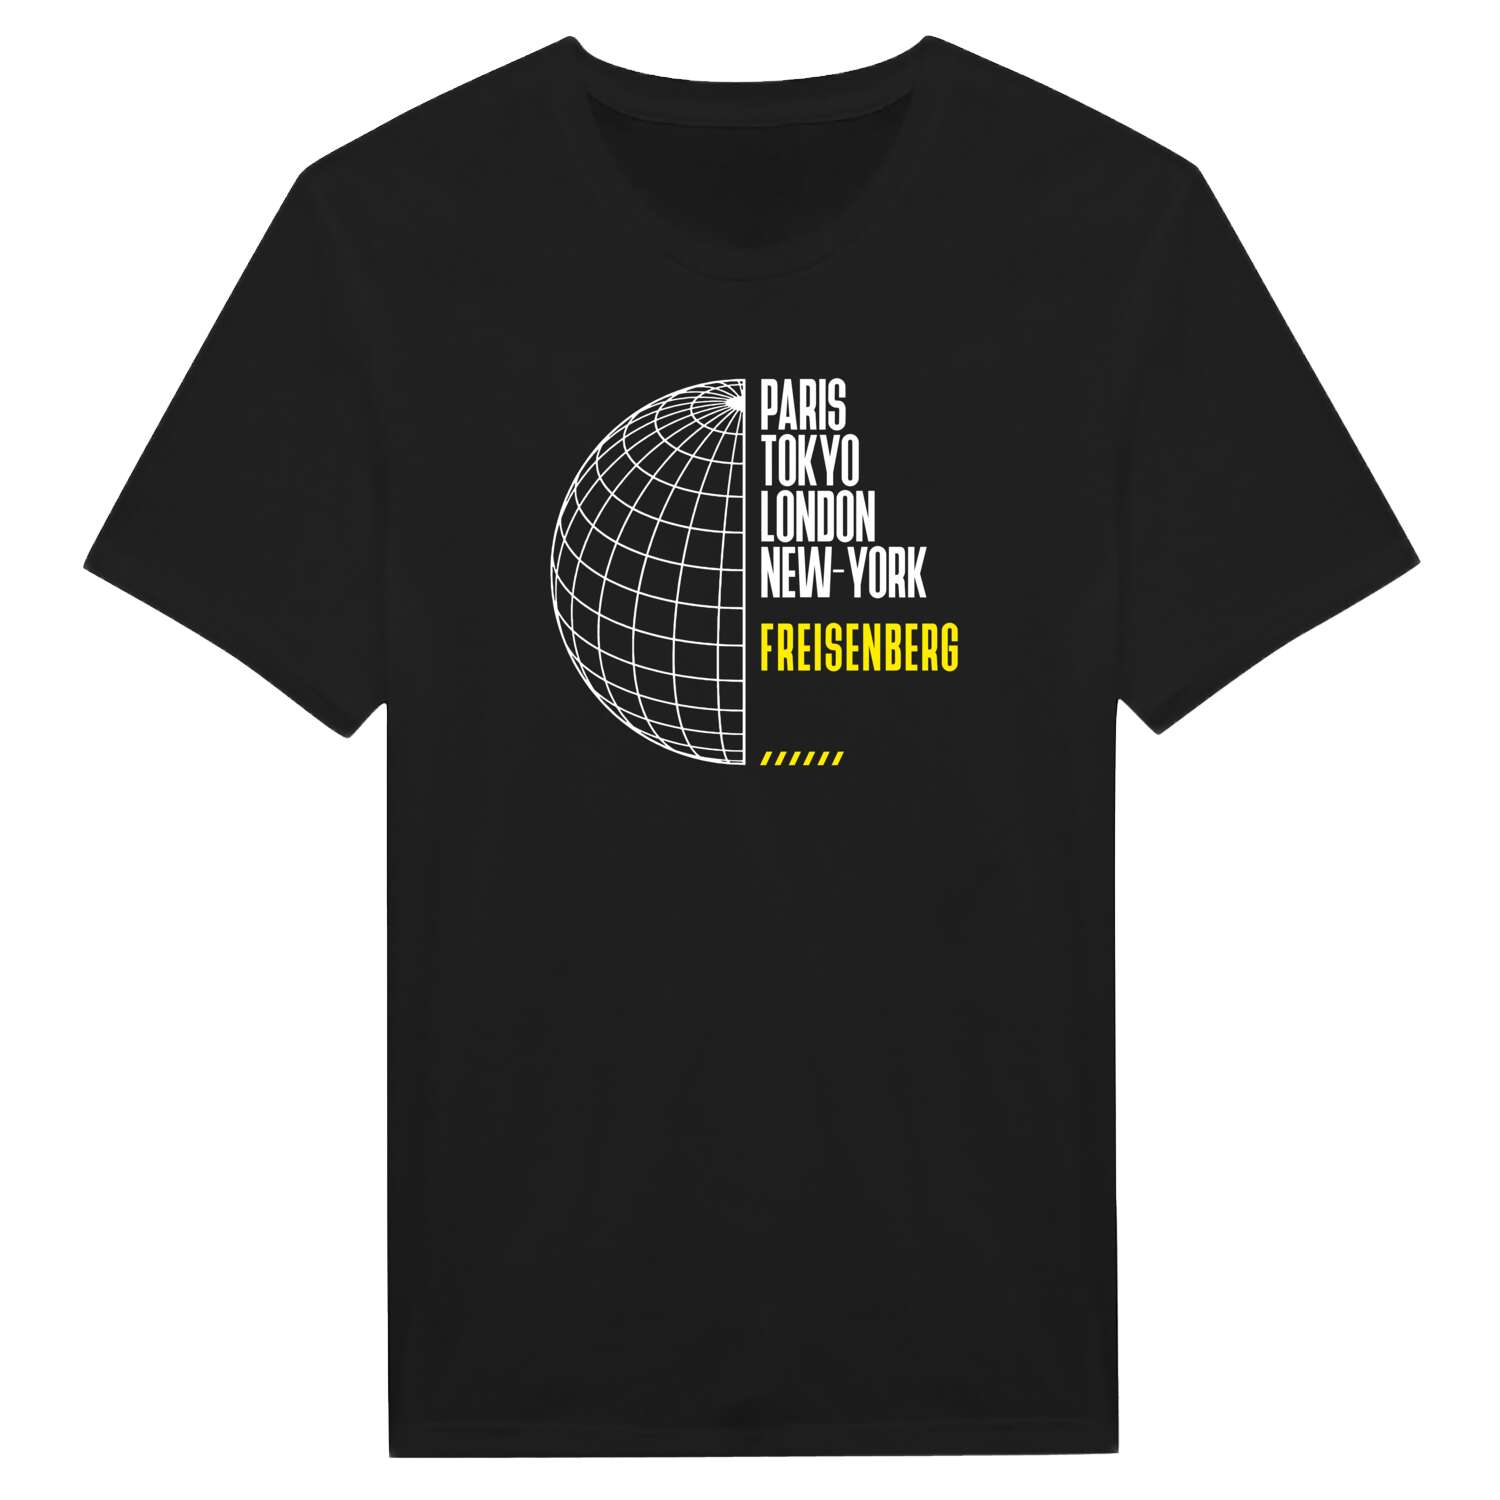 Freisenberg T-Shirt »Paris Tokyo London«